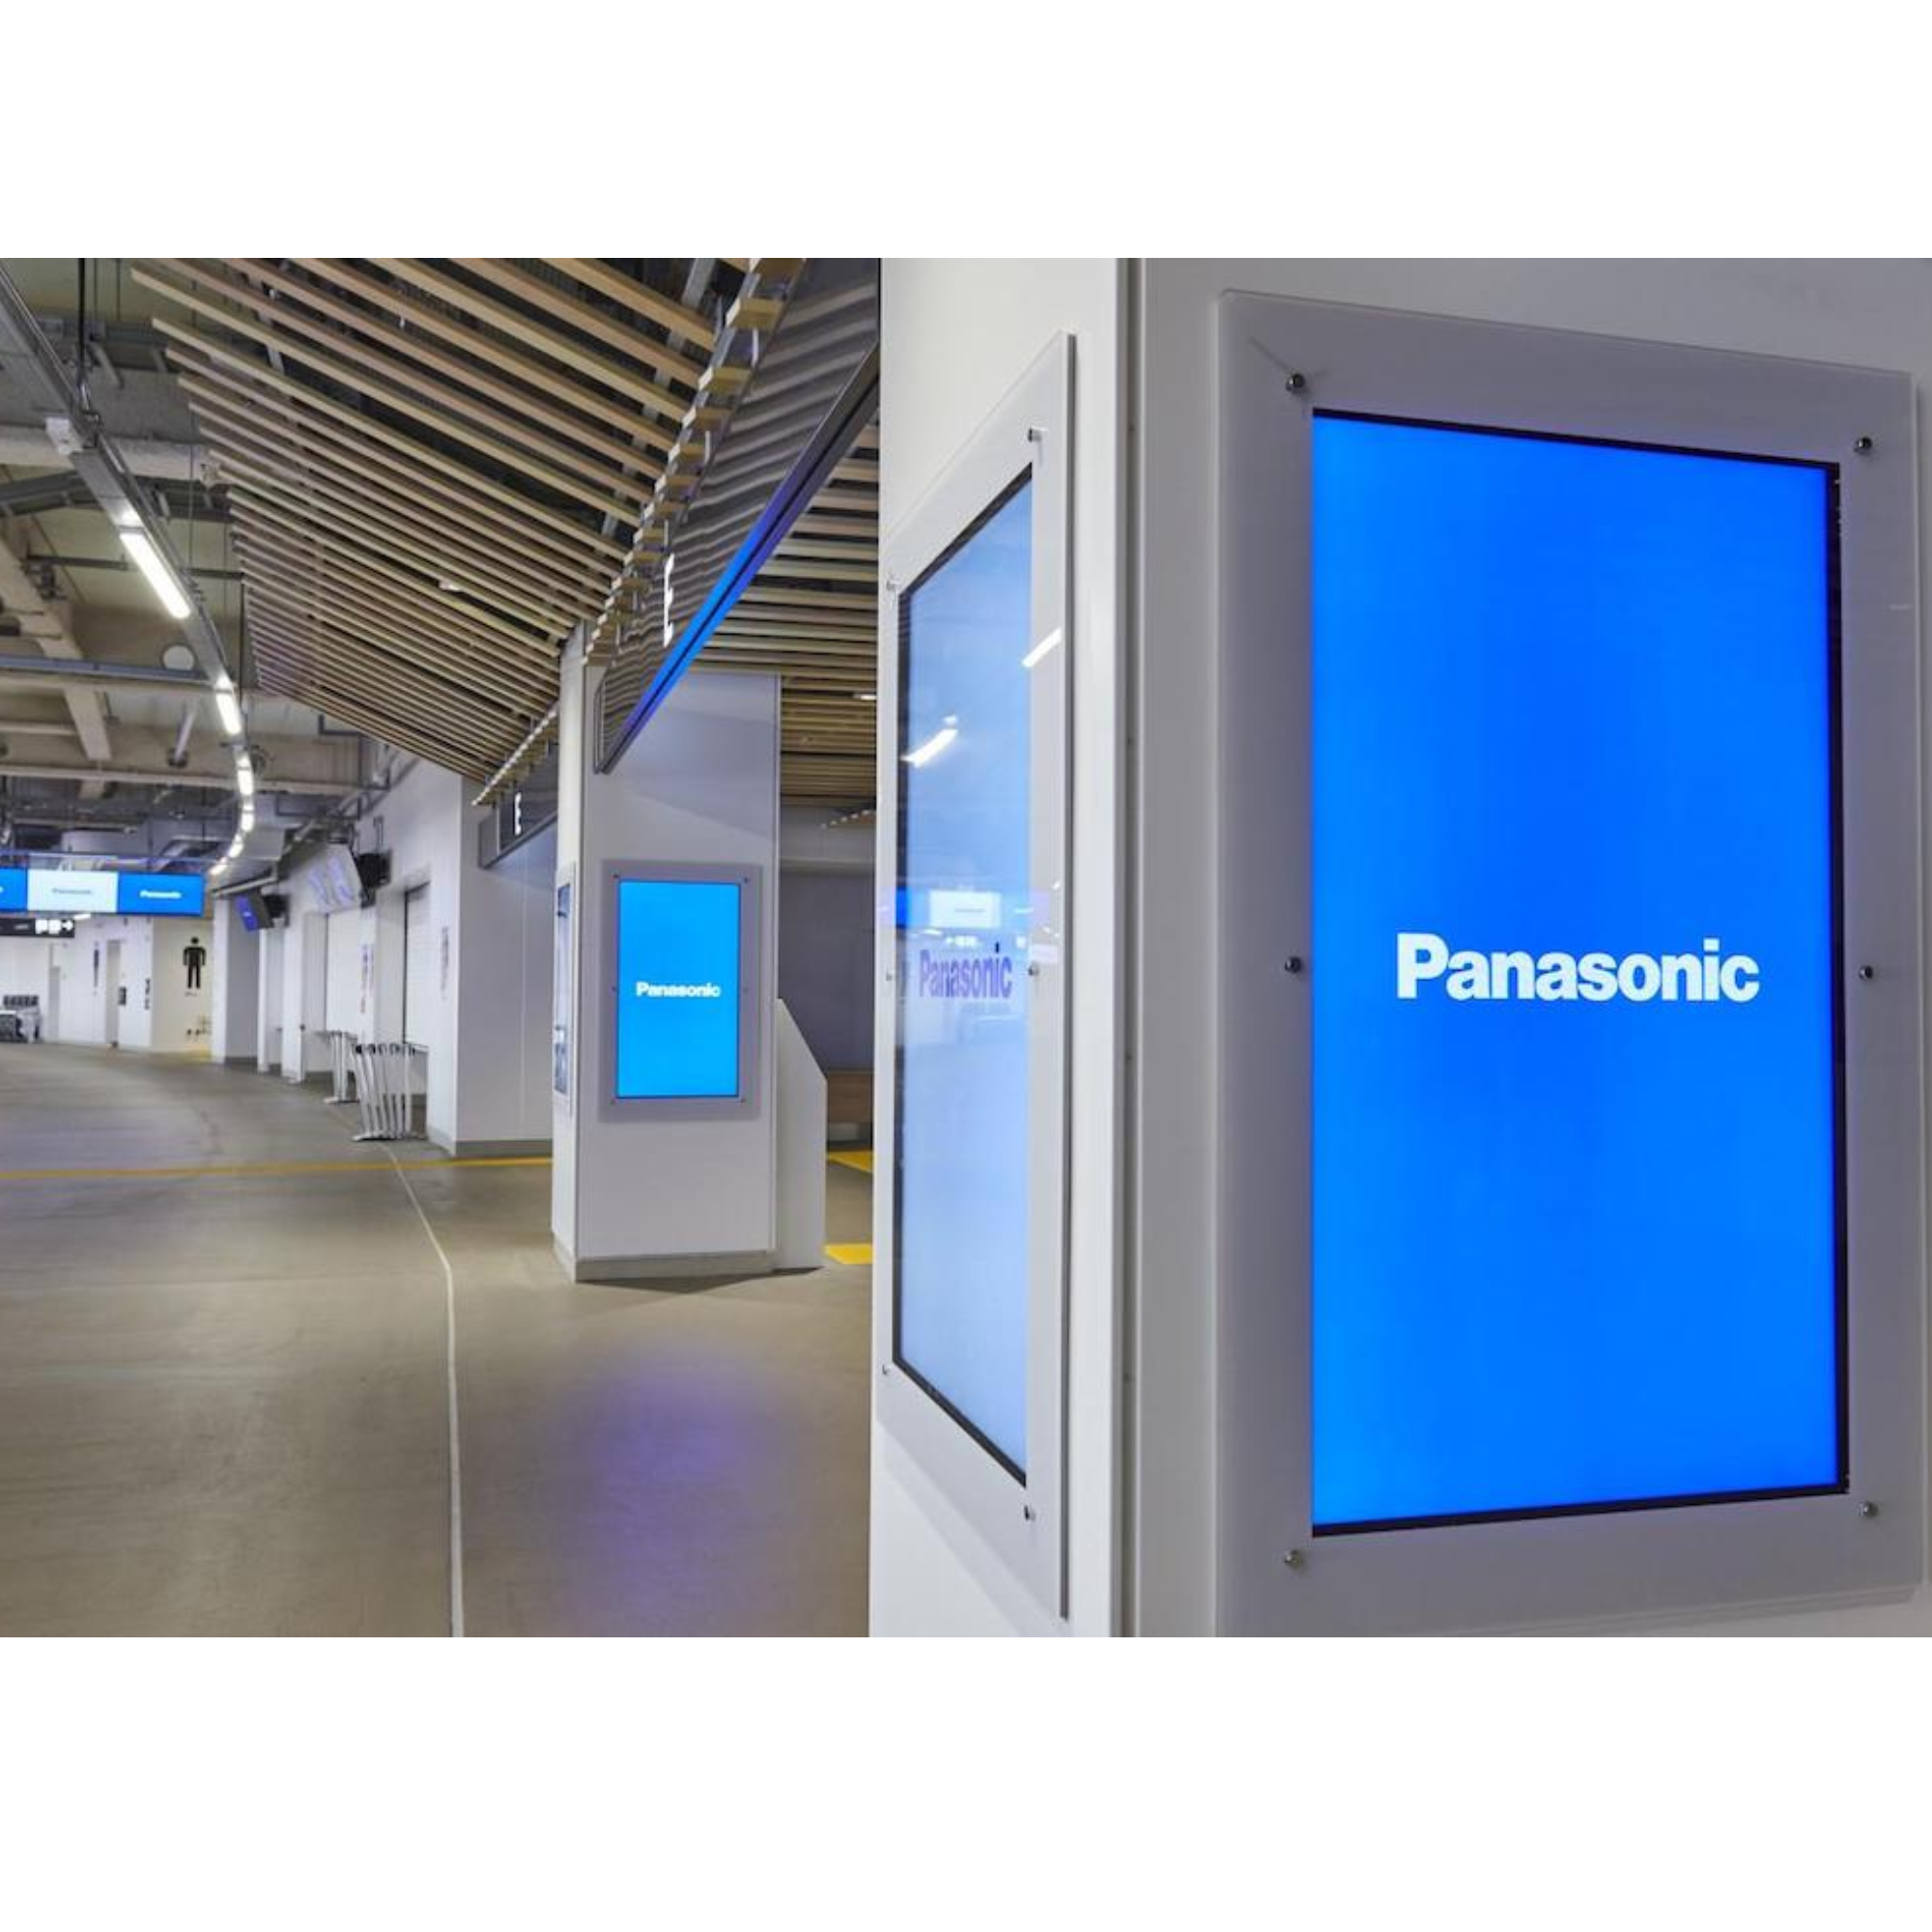 Panasonic Digital Signage Displays | Transform your business communication